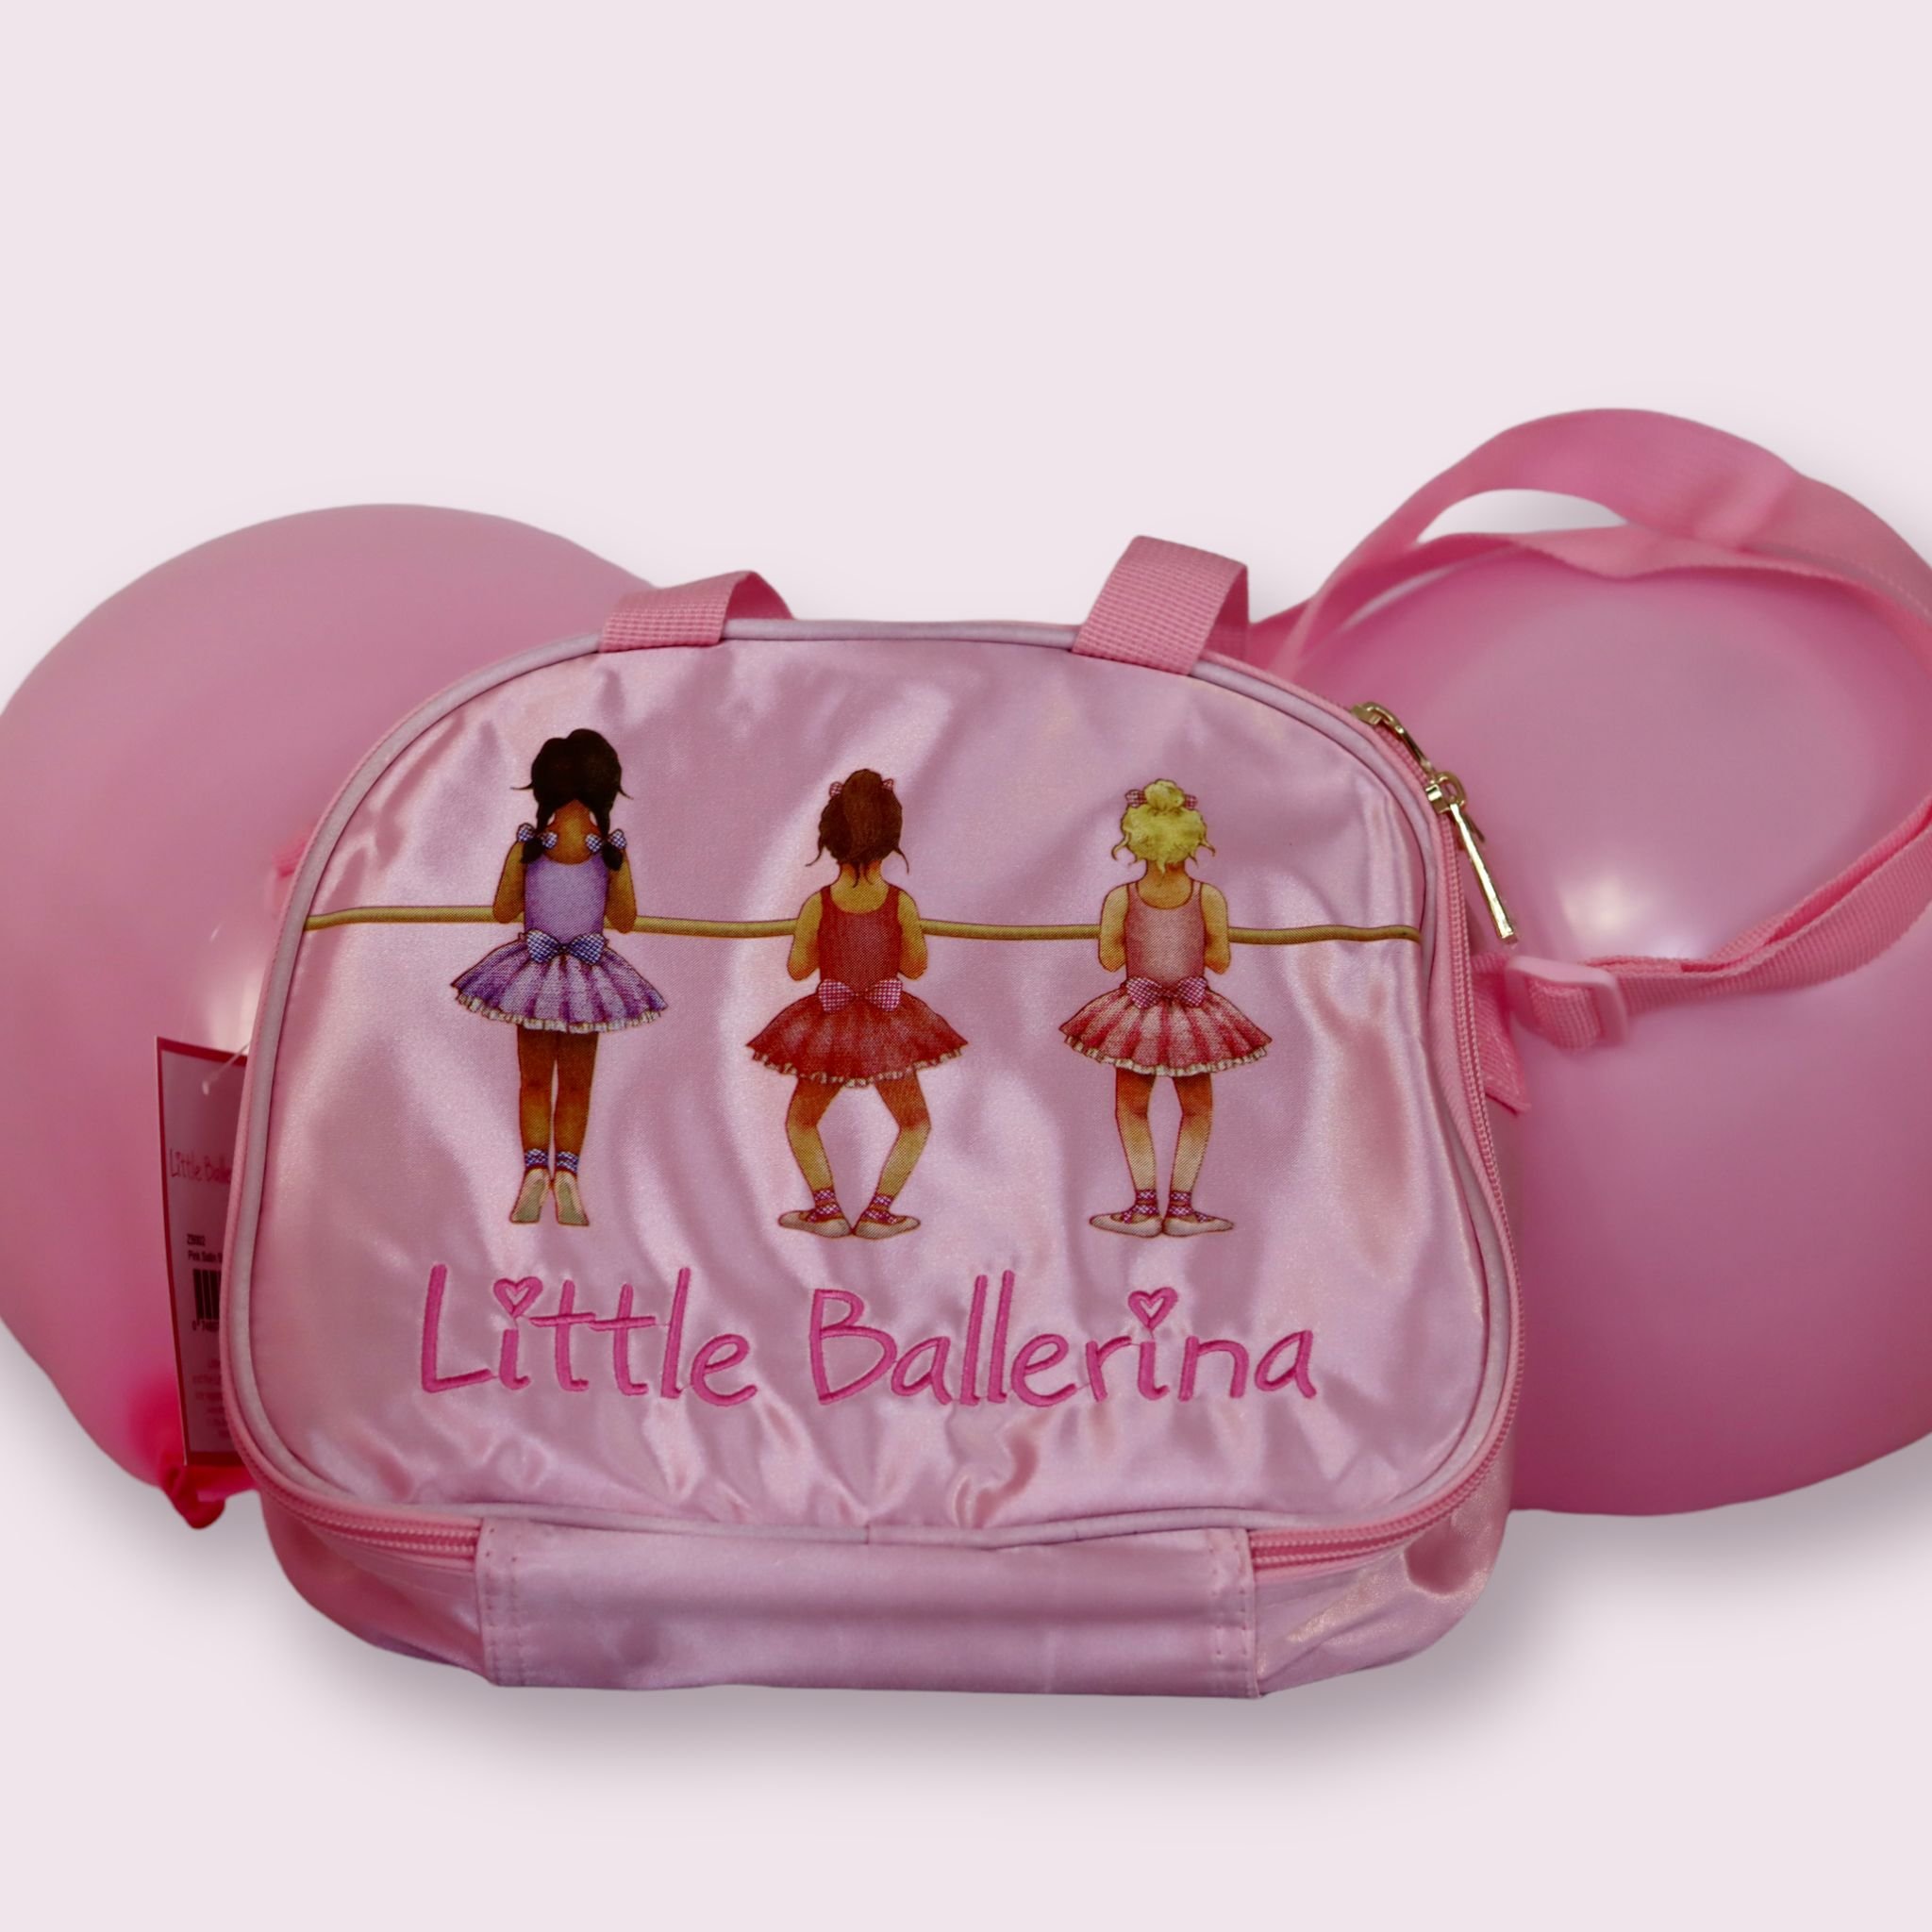 ROCH VALLEY Girls Ballerina Dance Bag Vanity Case Style